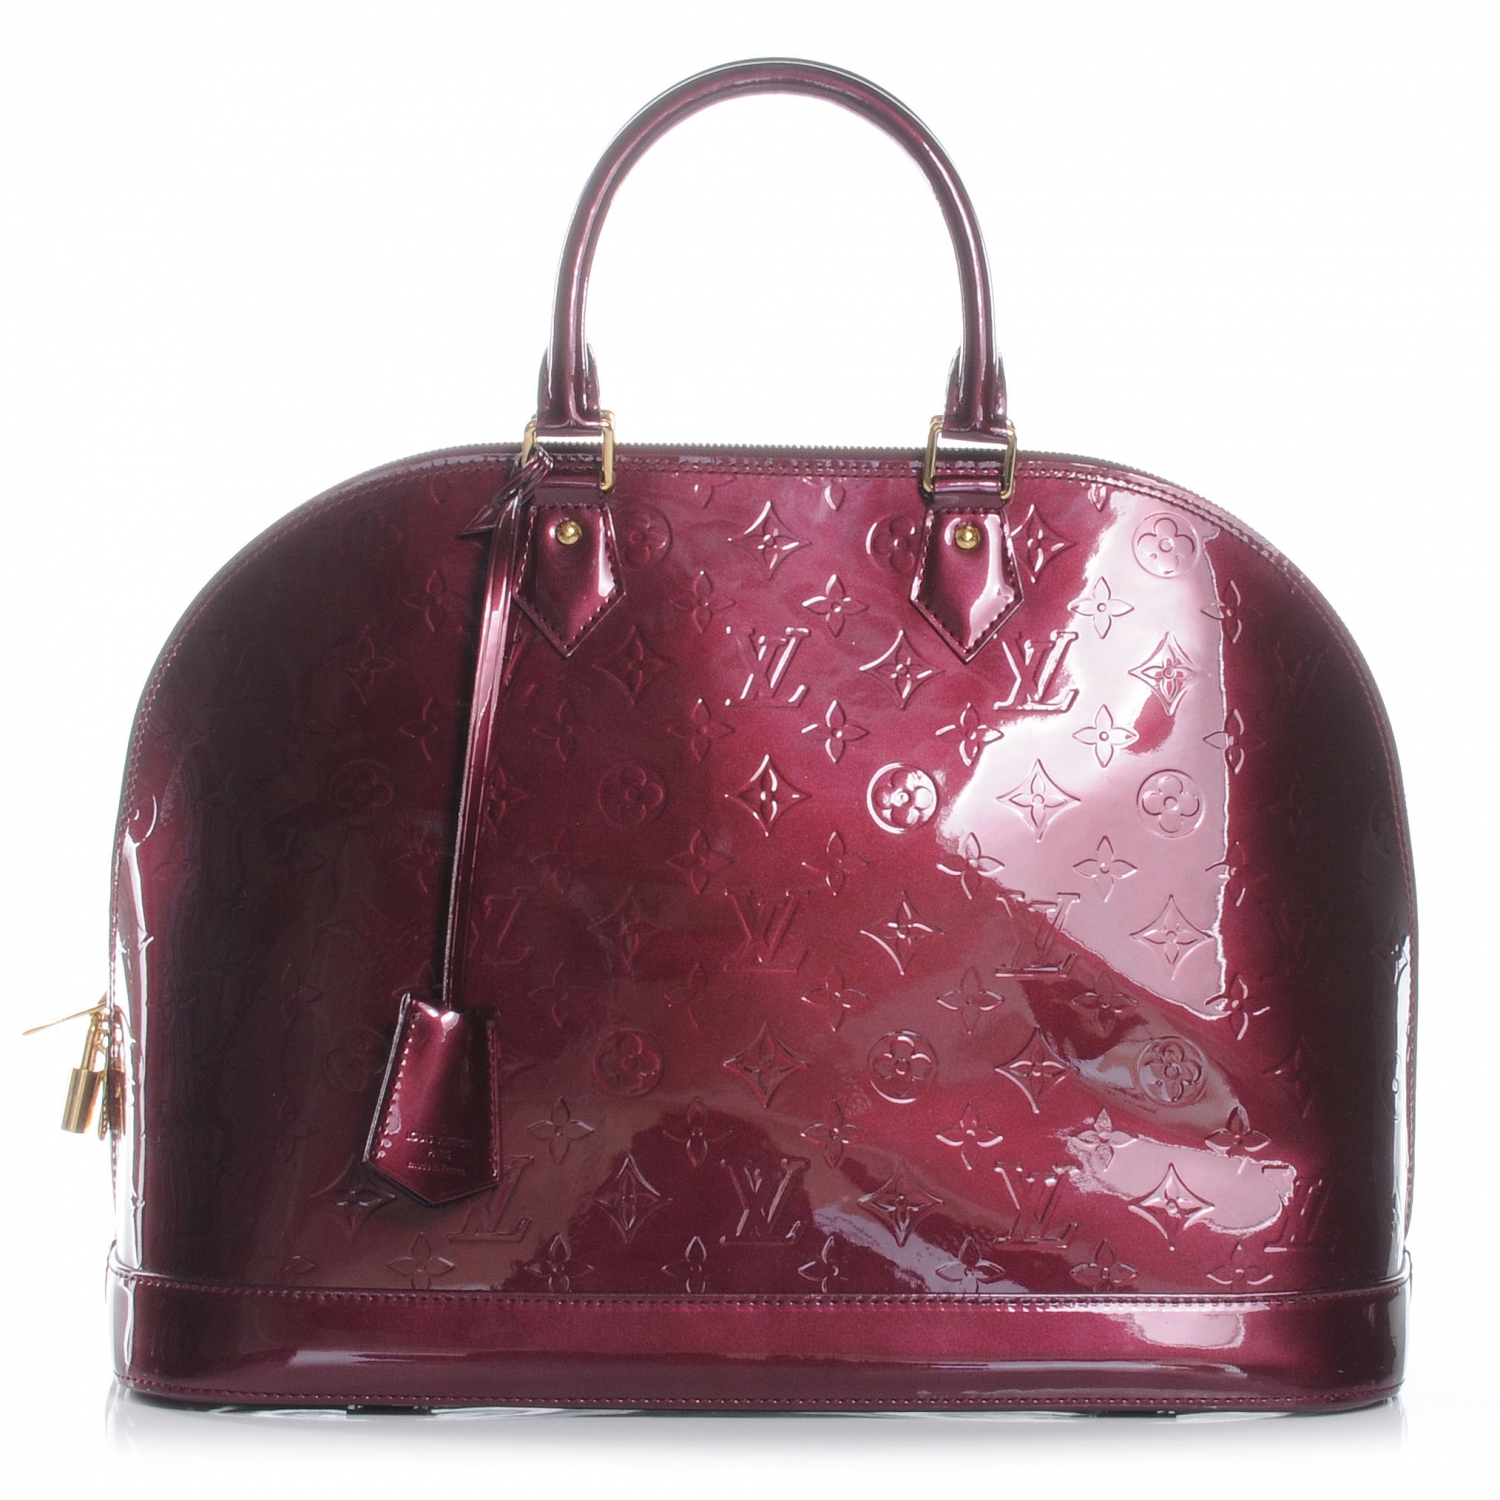 Our Louis Vuitton 2010 Amarante Vernis Alma GM Bag Louis Vuitton line is  available at affordable prices